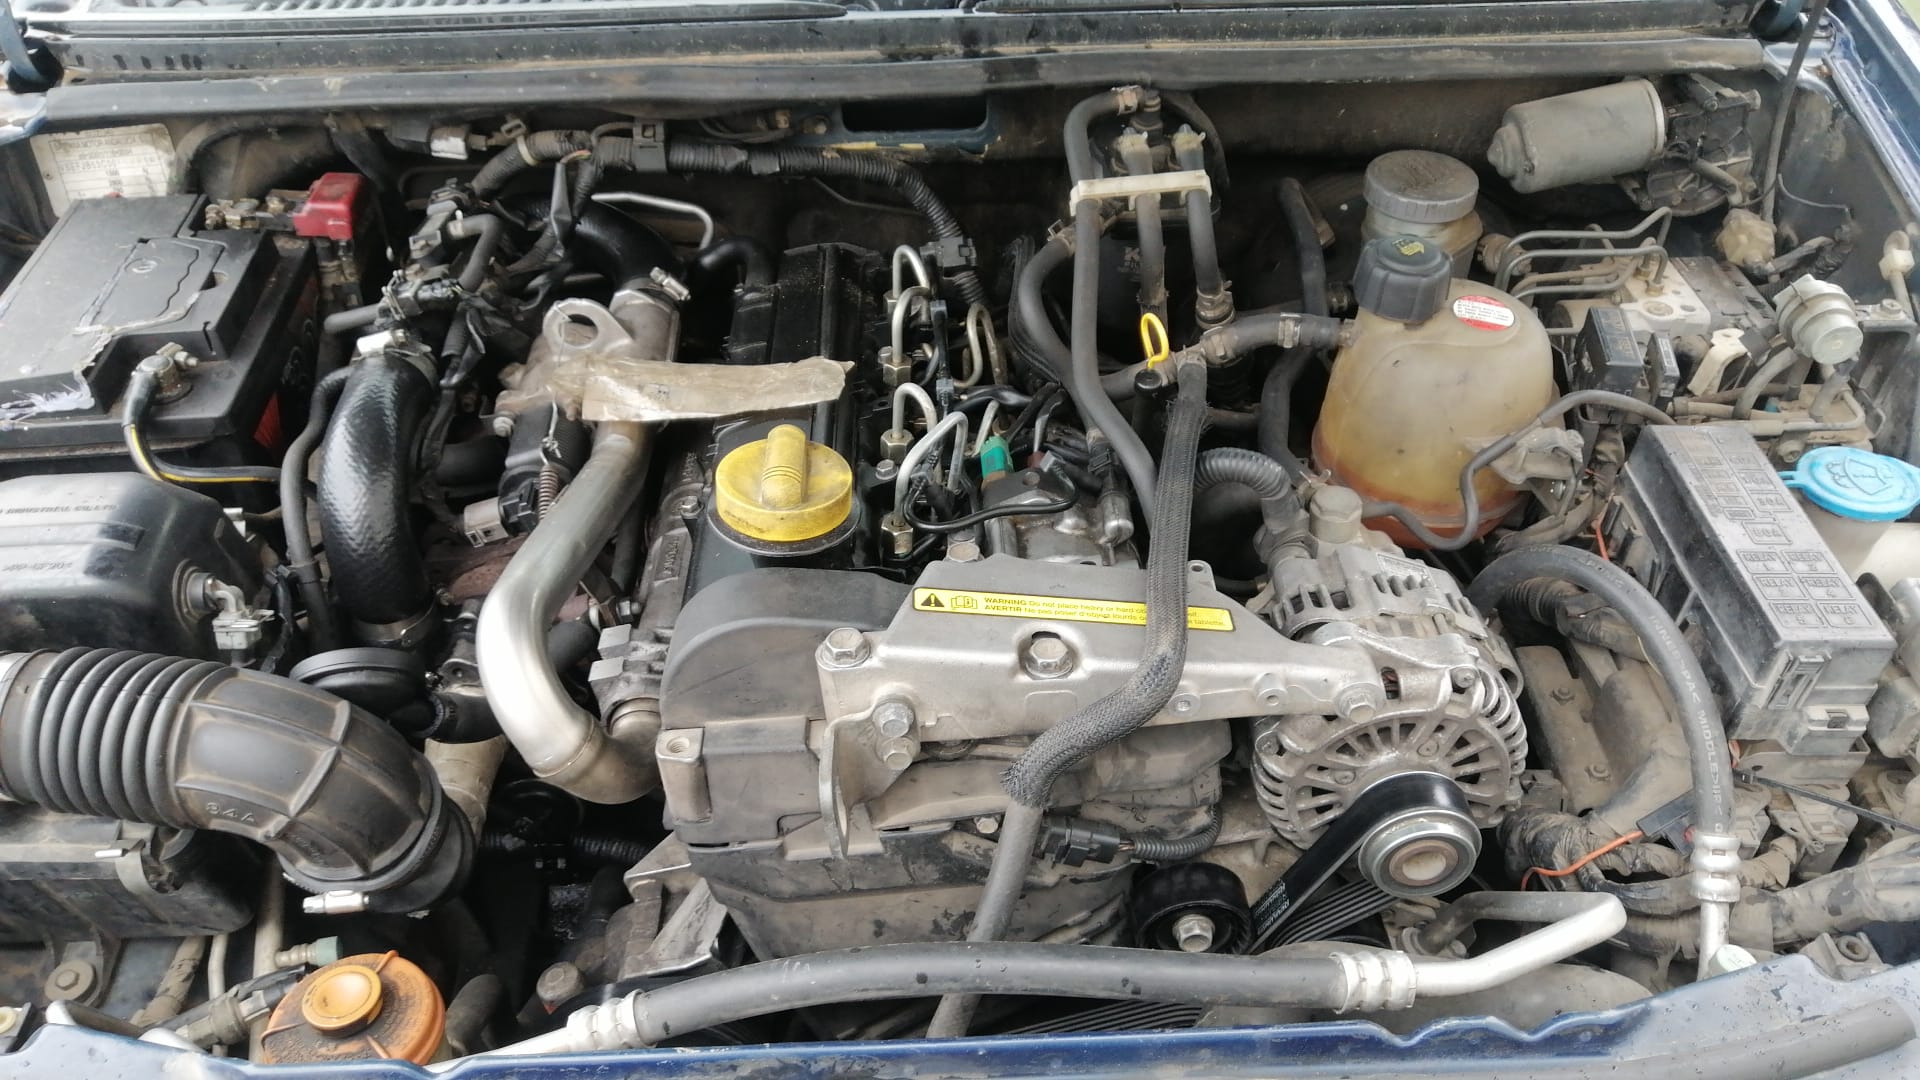 SUZUKI Jimny 3 generation (1998-2018) Генератор 3140084A10 18550746